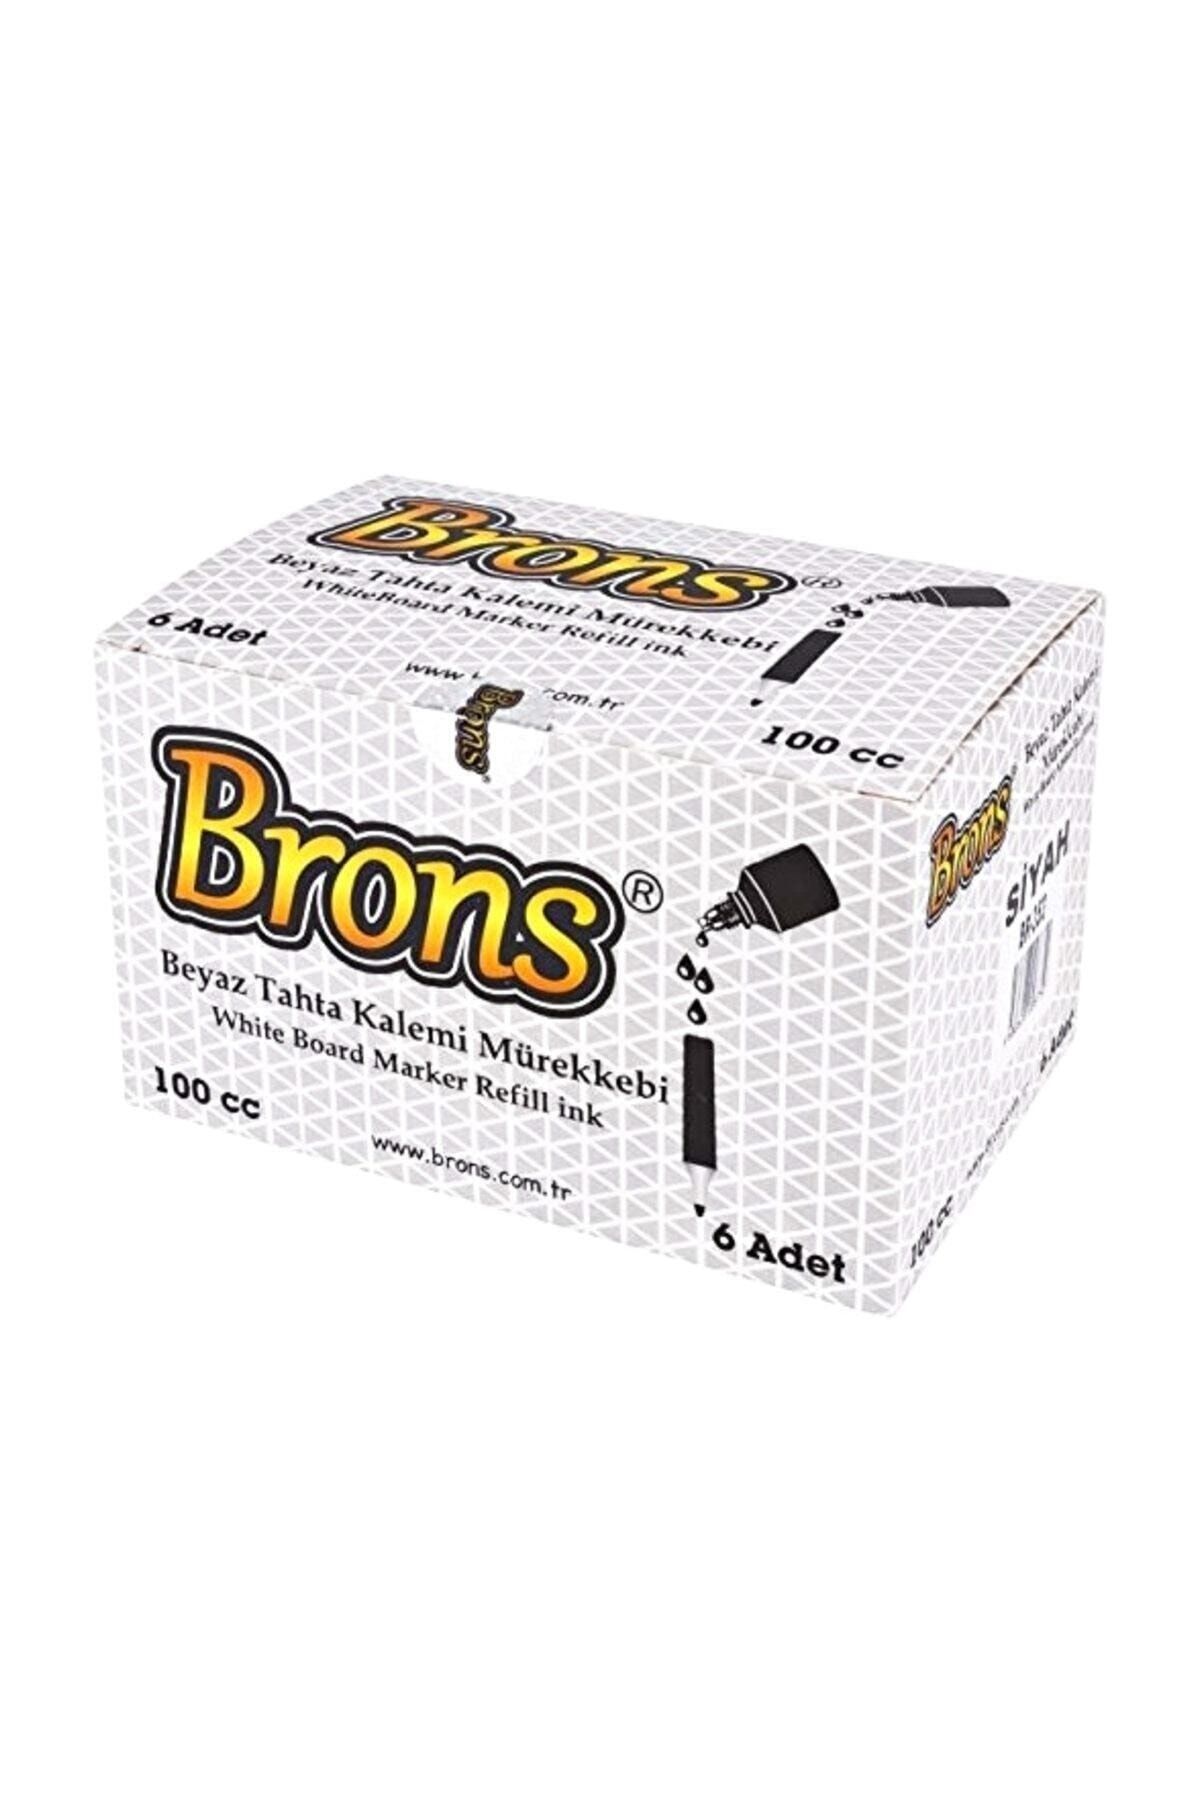 Brons Beyaz Tahta Kalem Mürekkebi 100cc Siyah Br-353 - 1 Paket (6 ADET)